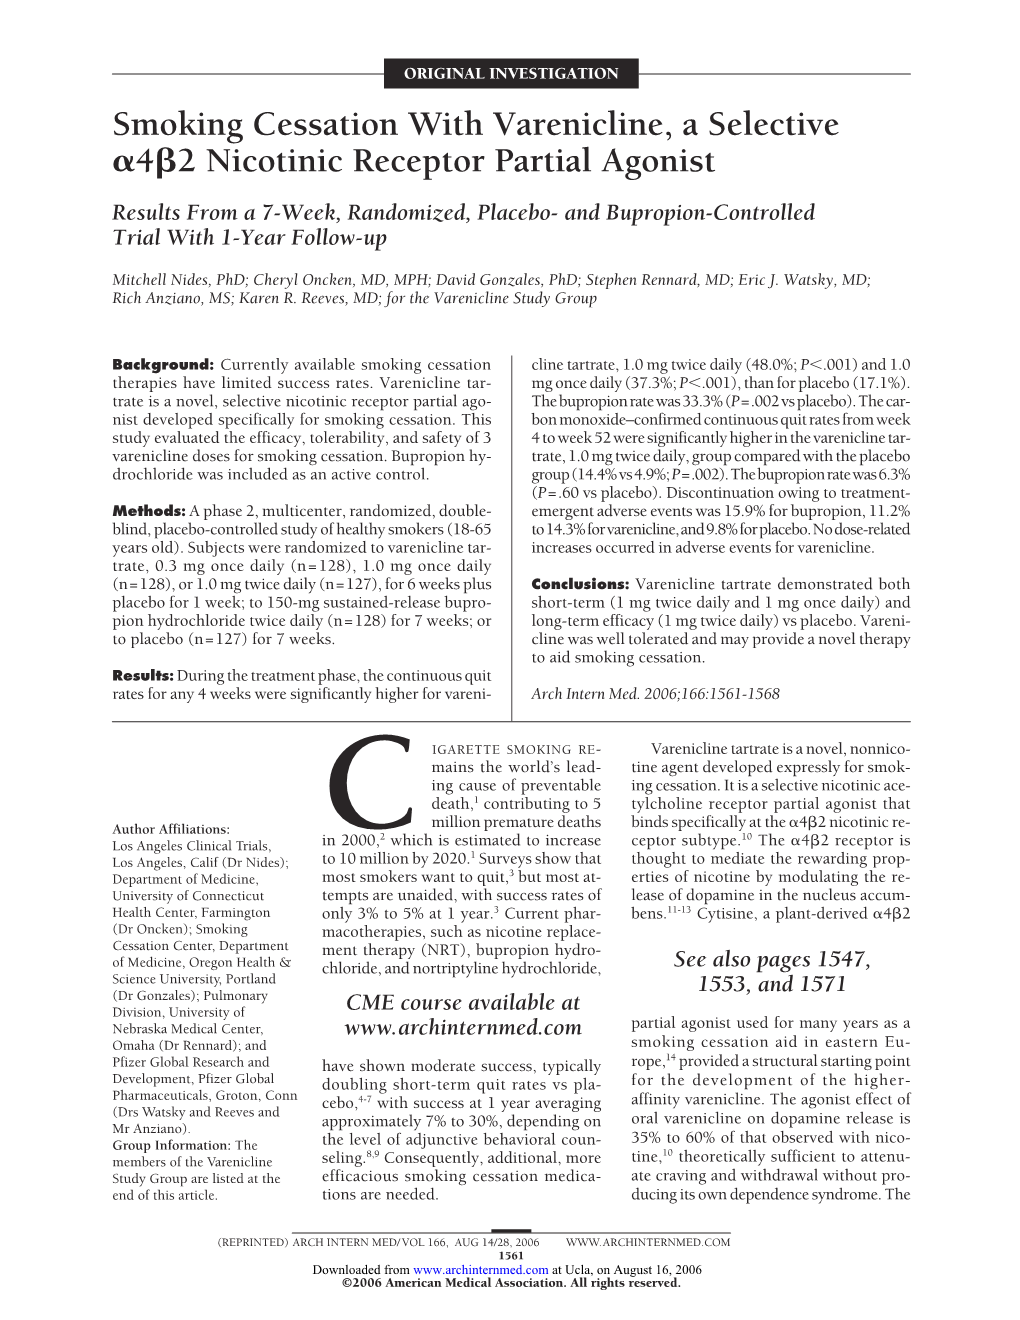 Smoking Cessation with Varenicline, a Selective 4 2 Nicotinic Receptor